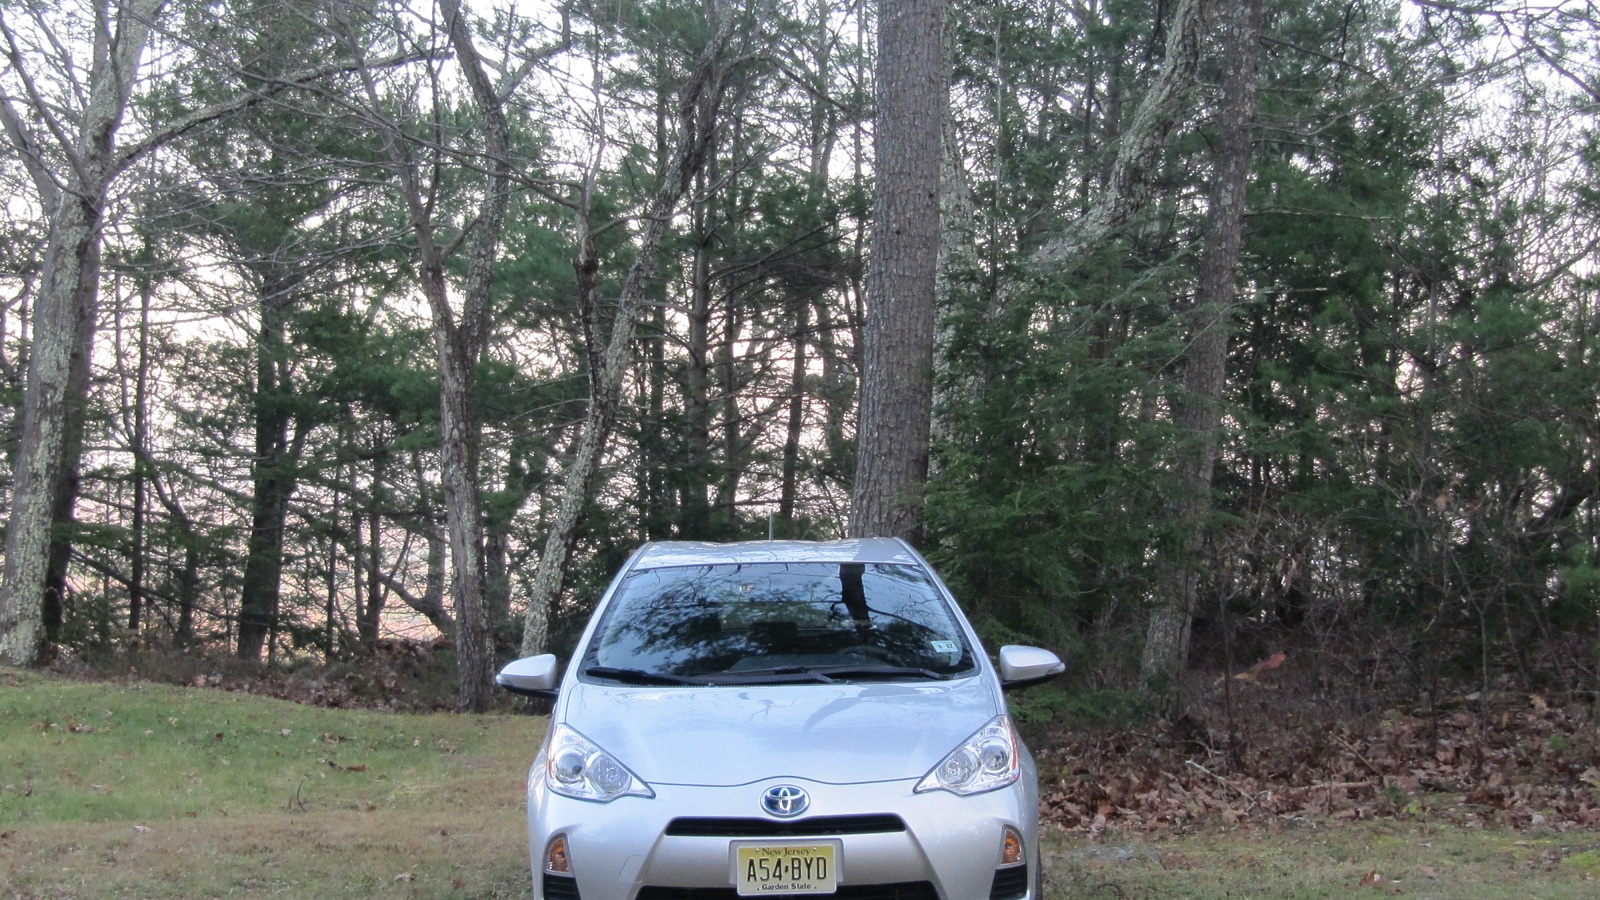 2012 Toyota Prius C, Catskill Mountains, NY, Oct 2012